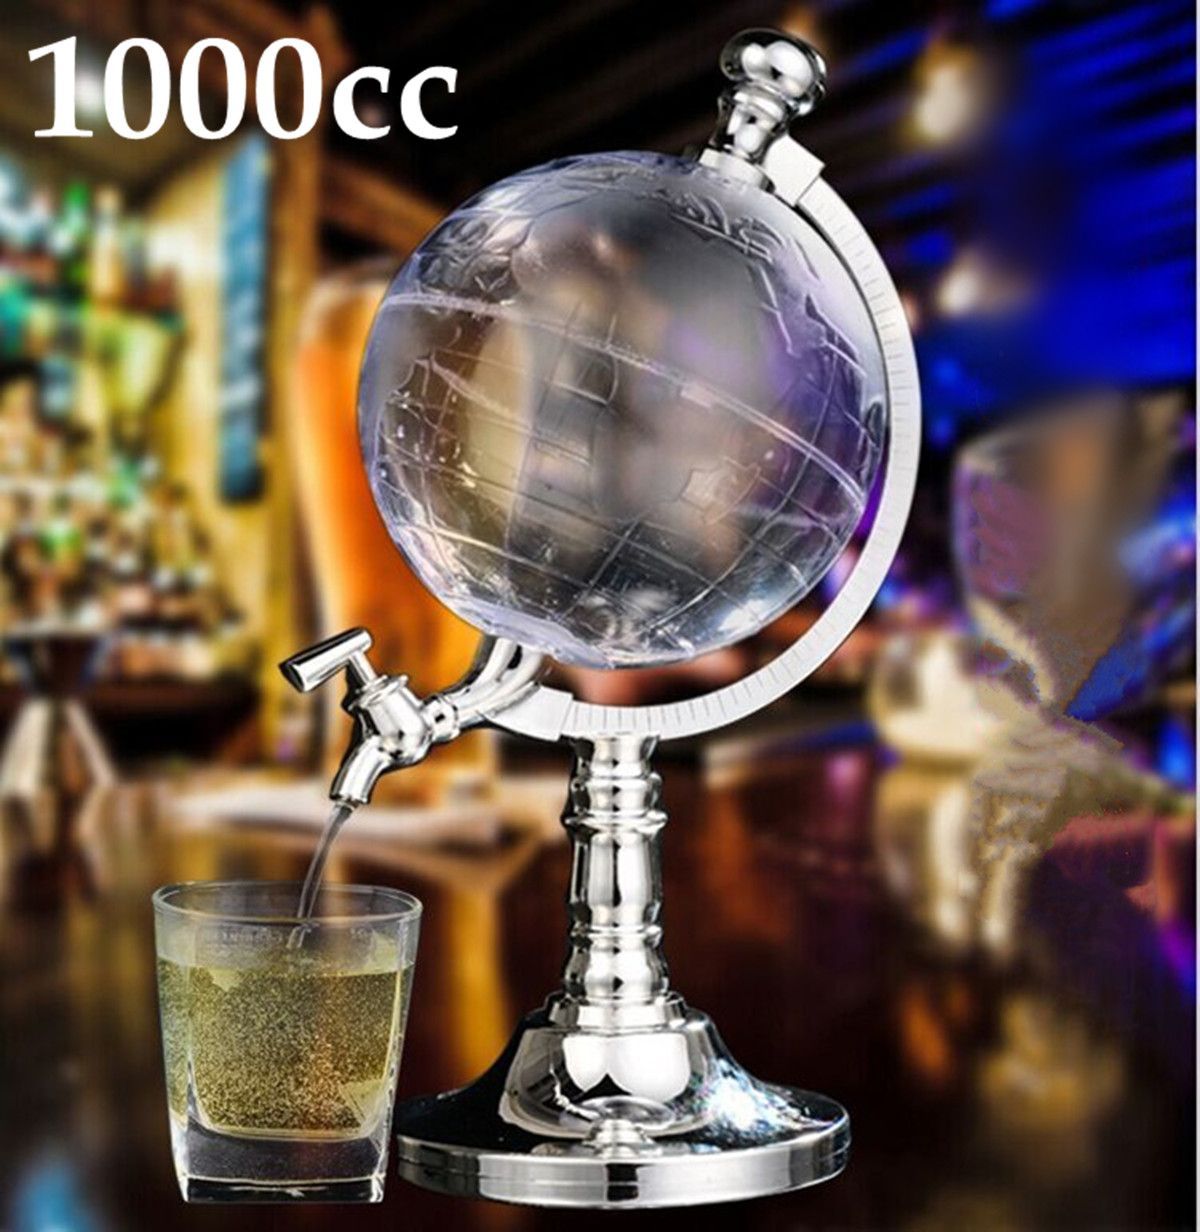 1000cc-Globe-Shaped-Liquor-Drink-Draft-Dispenser-Beverage-Pump-Decanter-Tap-1370965